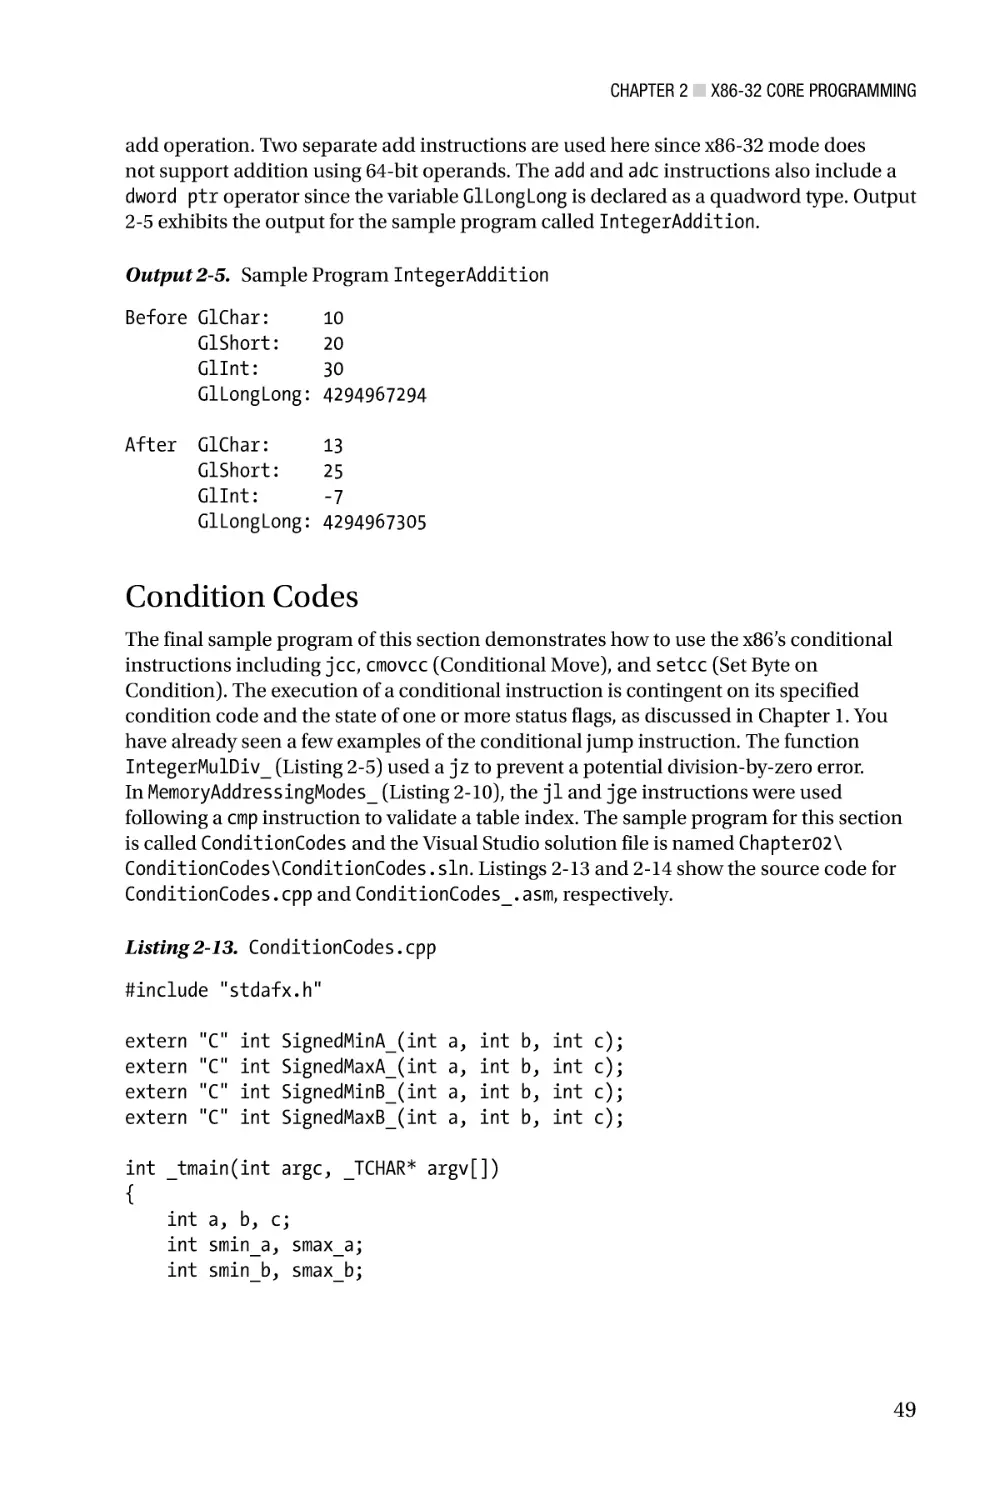 Condition Codes